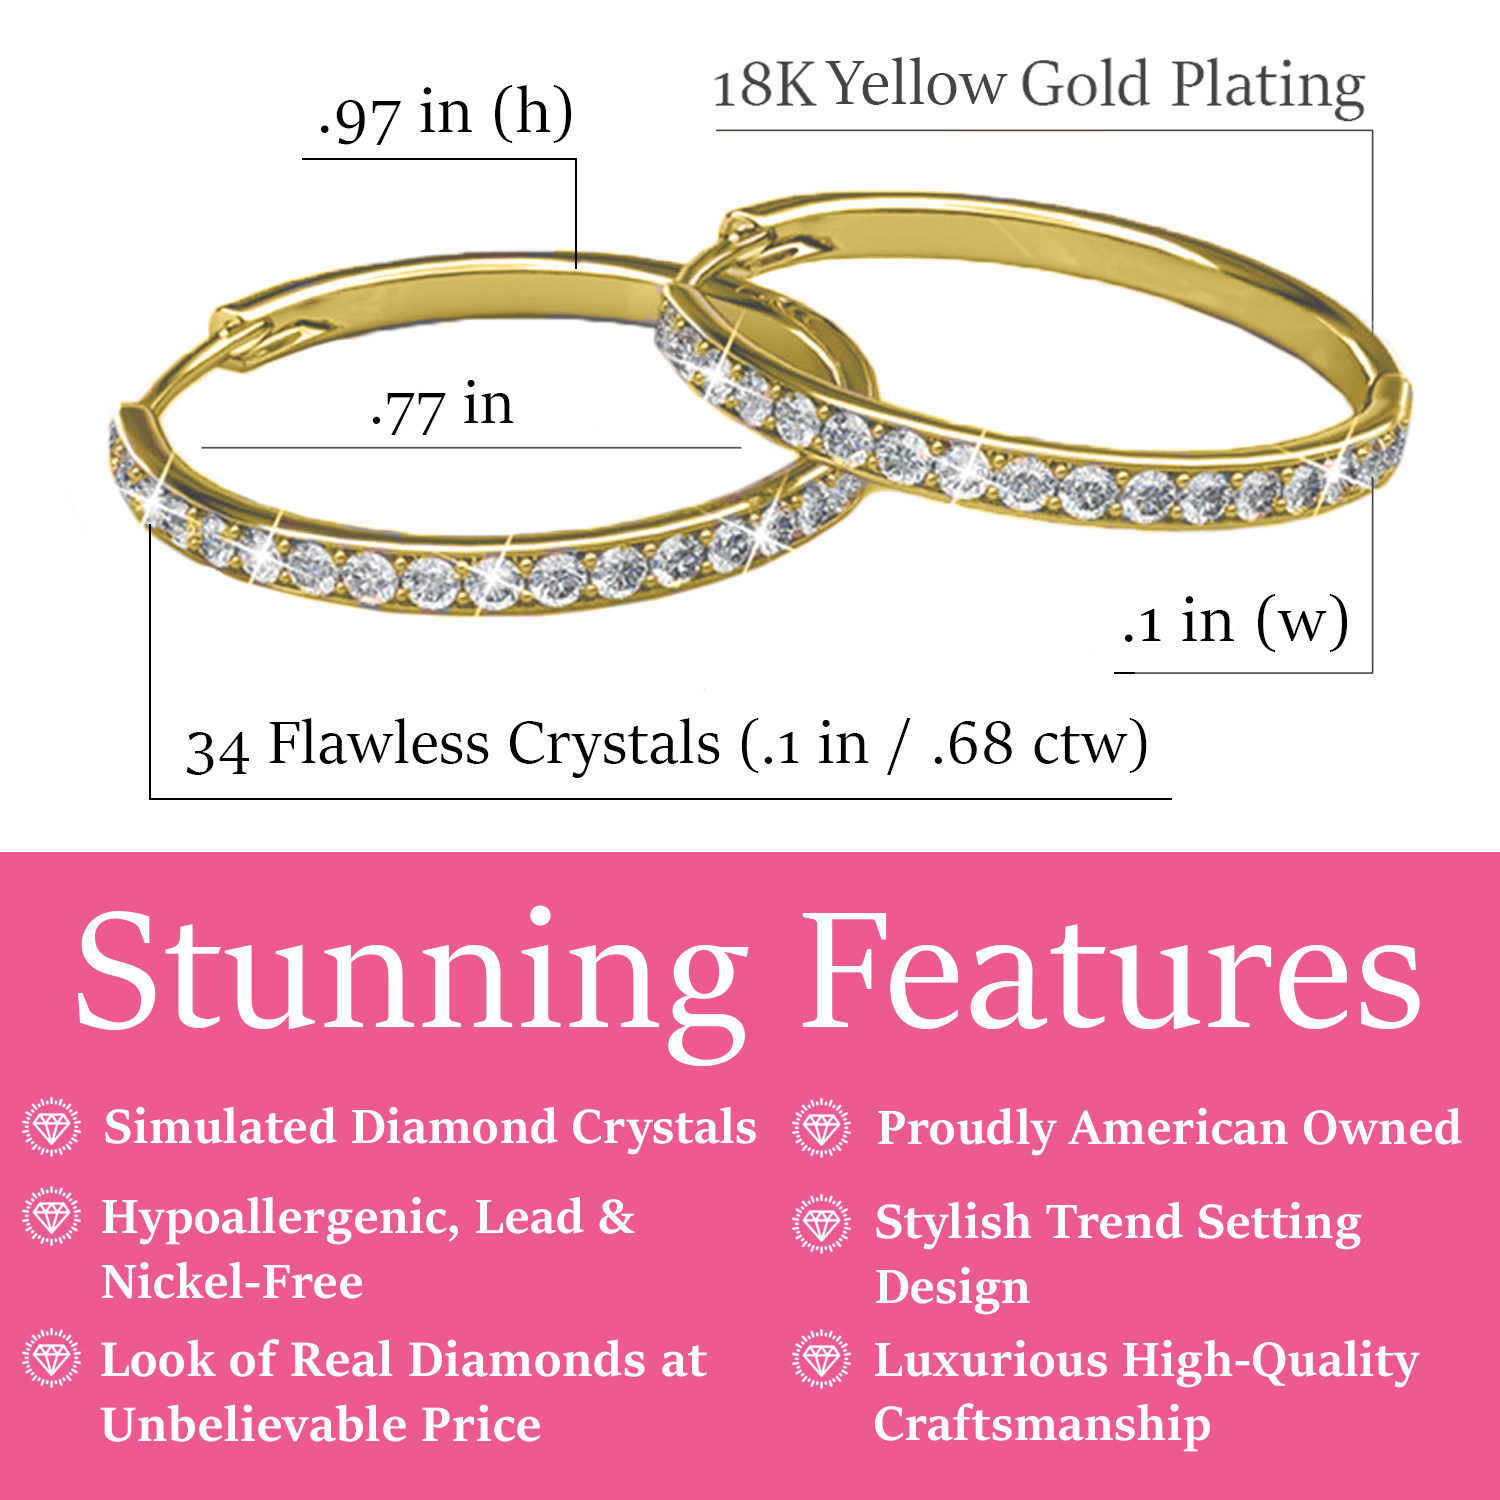 Cate & Chloe Bianca 18k Yellow Gold Plated Hoop Earrings | Women's Crystal Earrings | Gift for Her - image 4 of 11